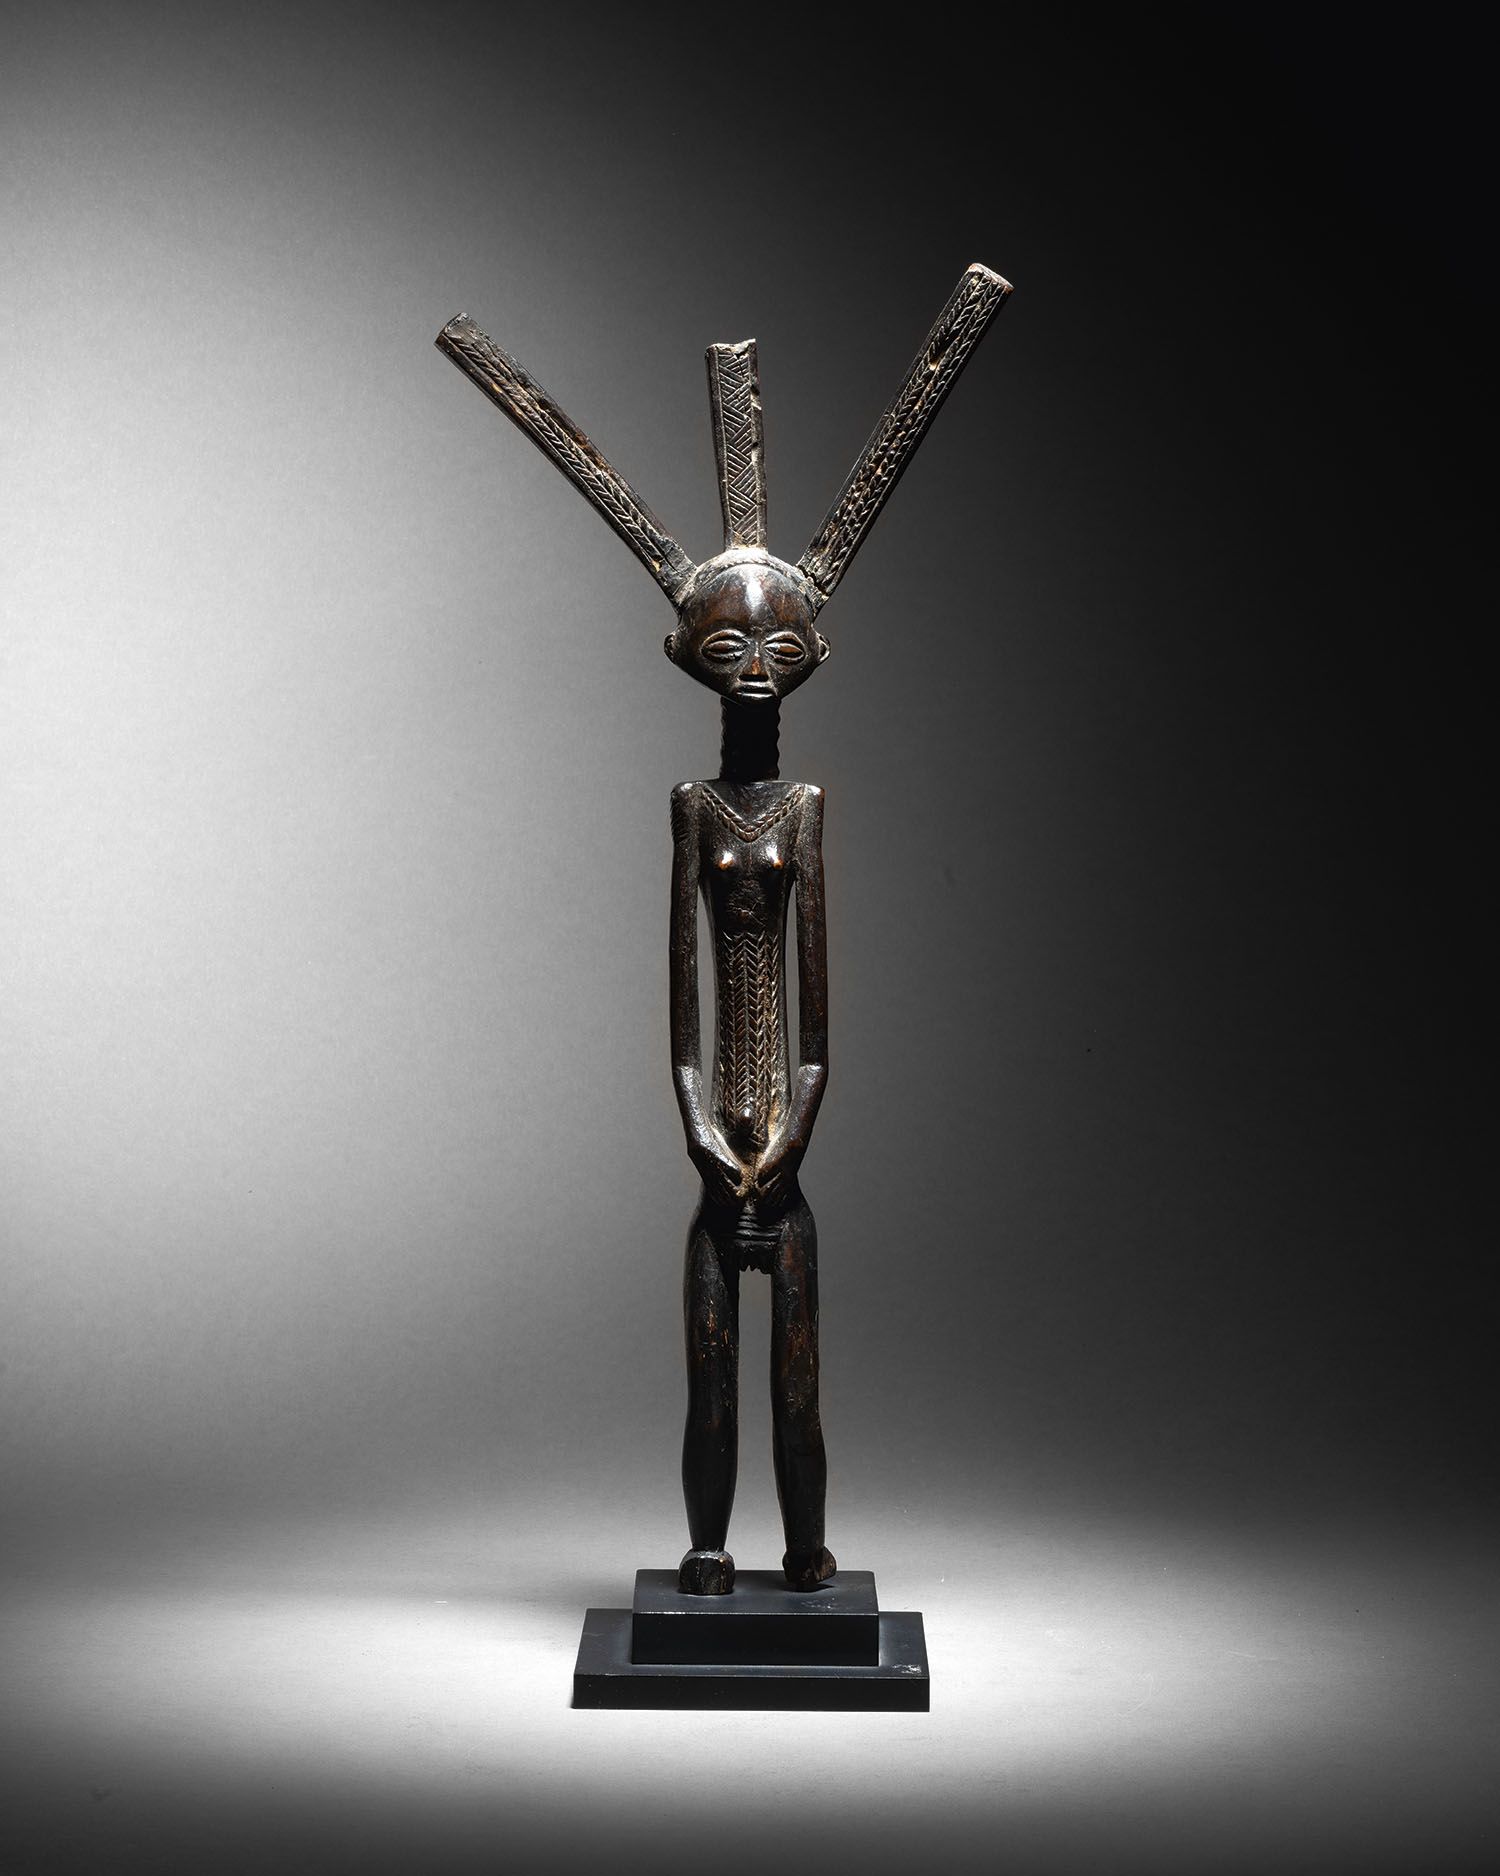 Null Pfeilhalter Luba, Demokratische Republik Kongo
Holz
H. 38 cm
Luba arrow-hol&hellip;